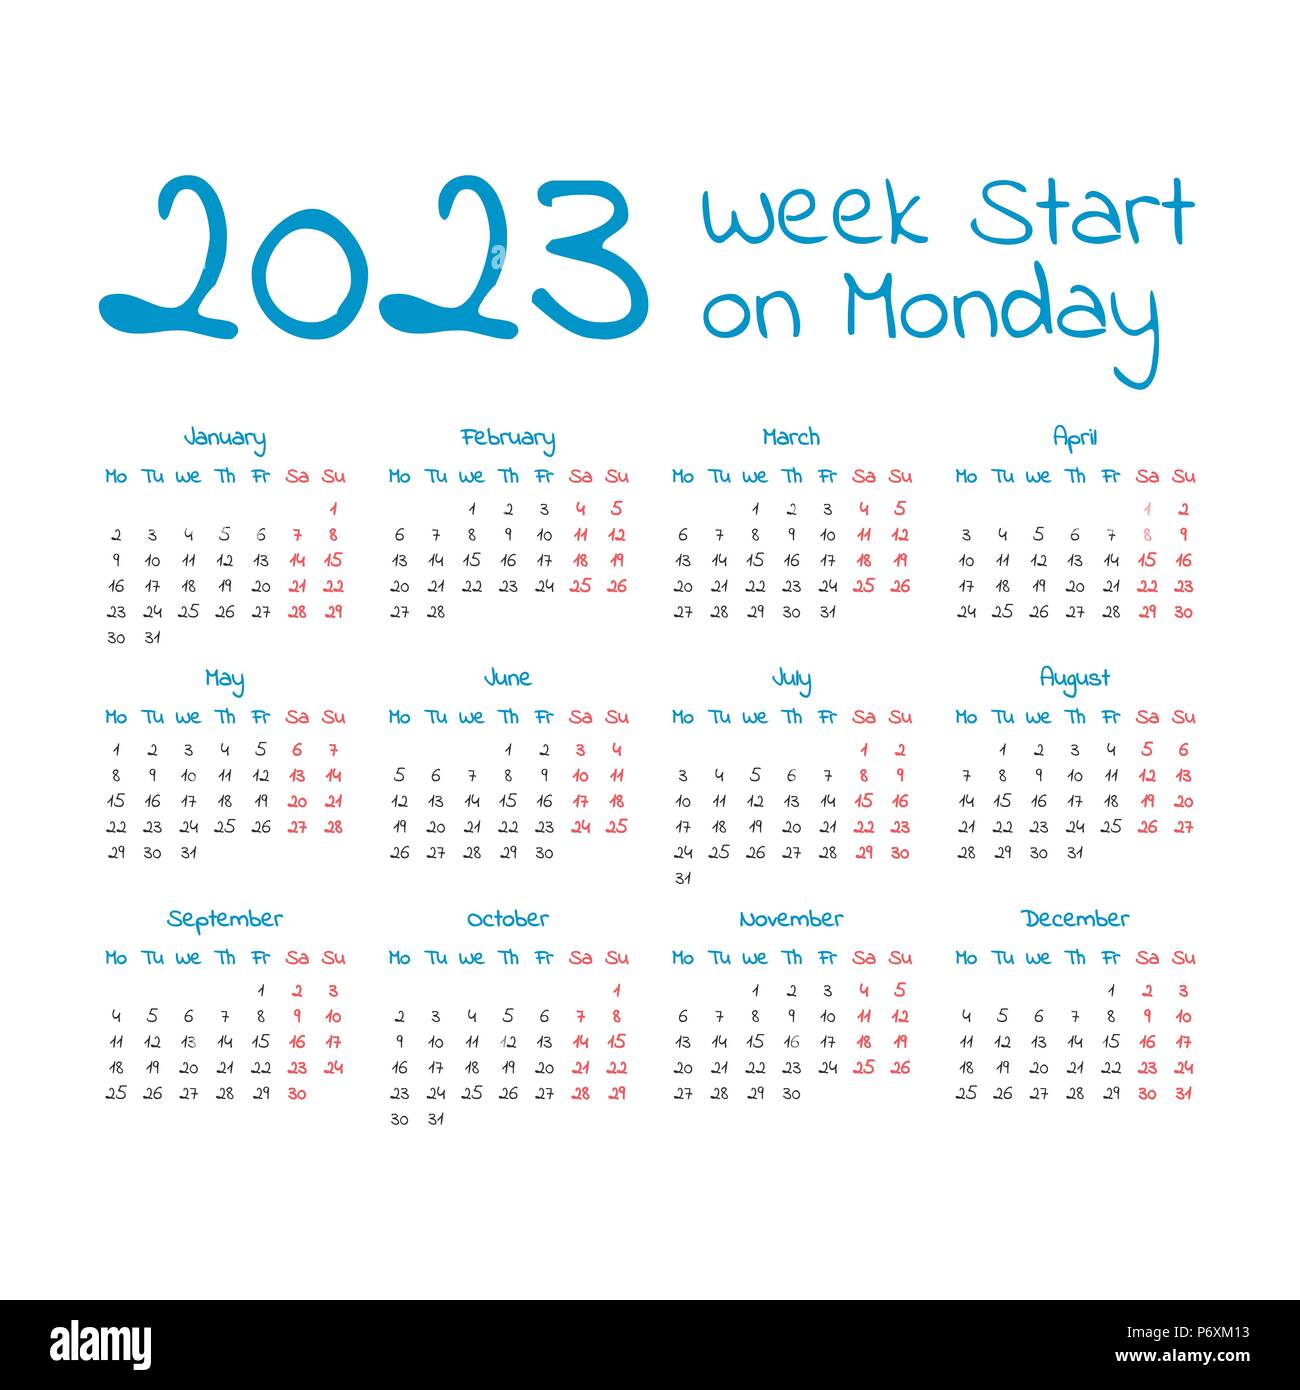 2023 calendar with weeks - shopmall.my